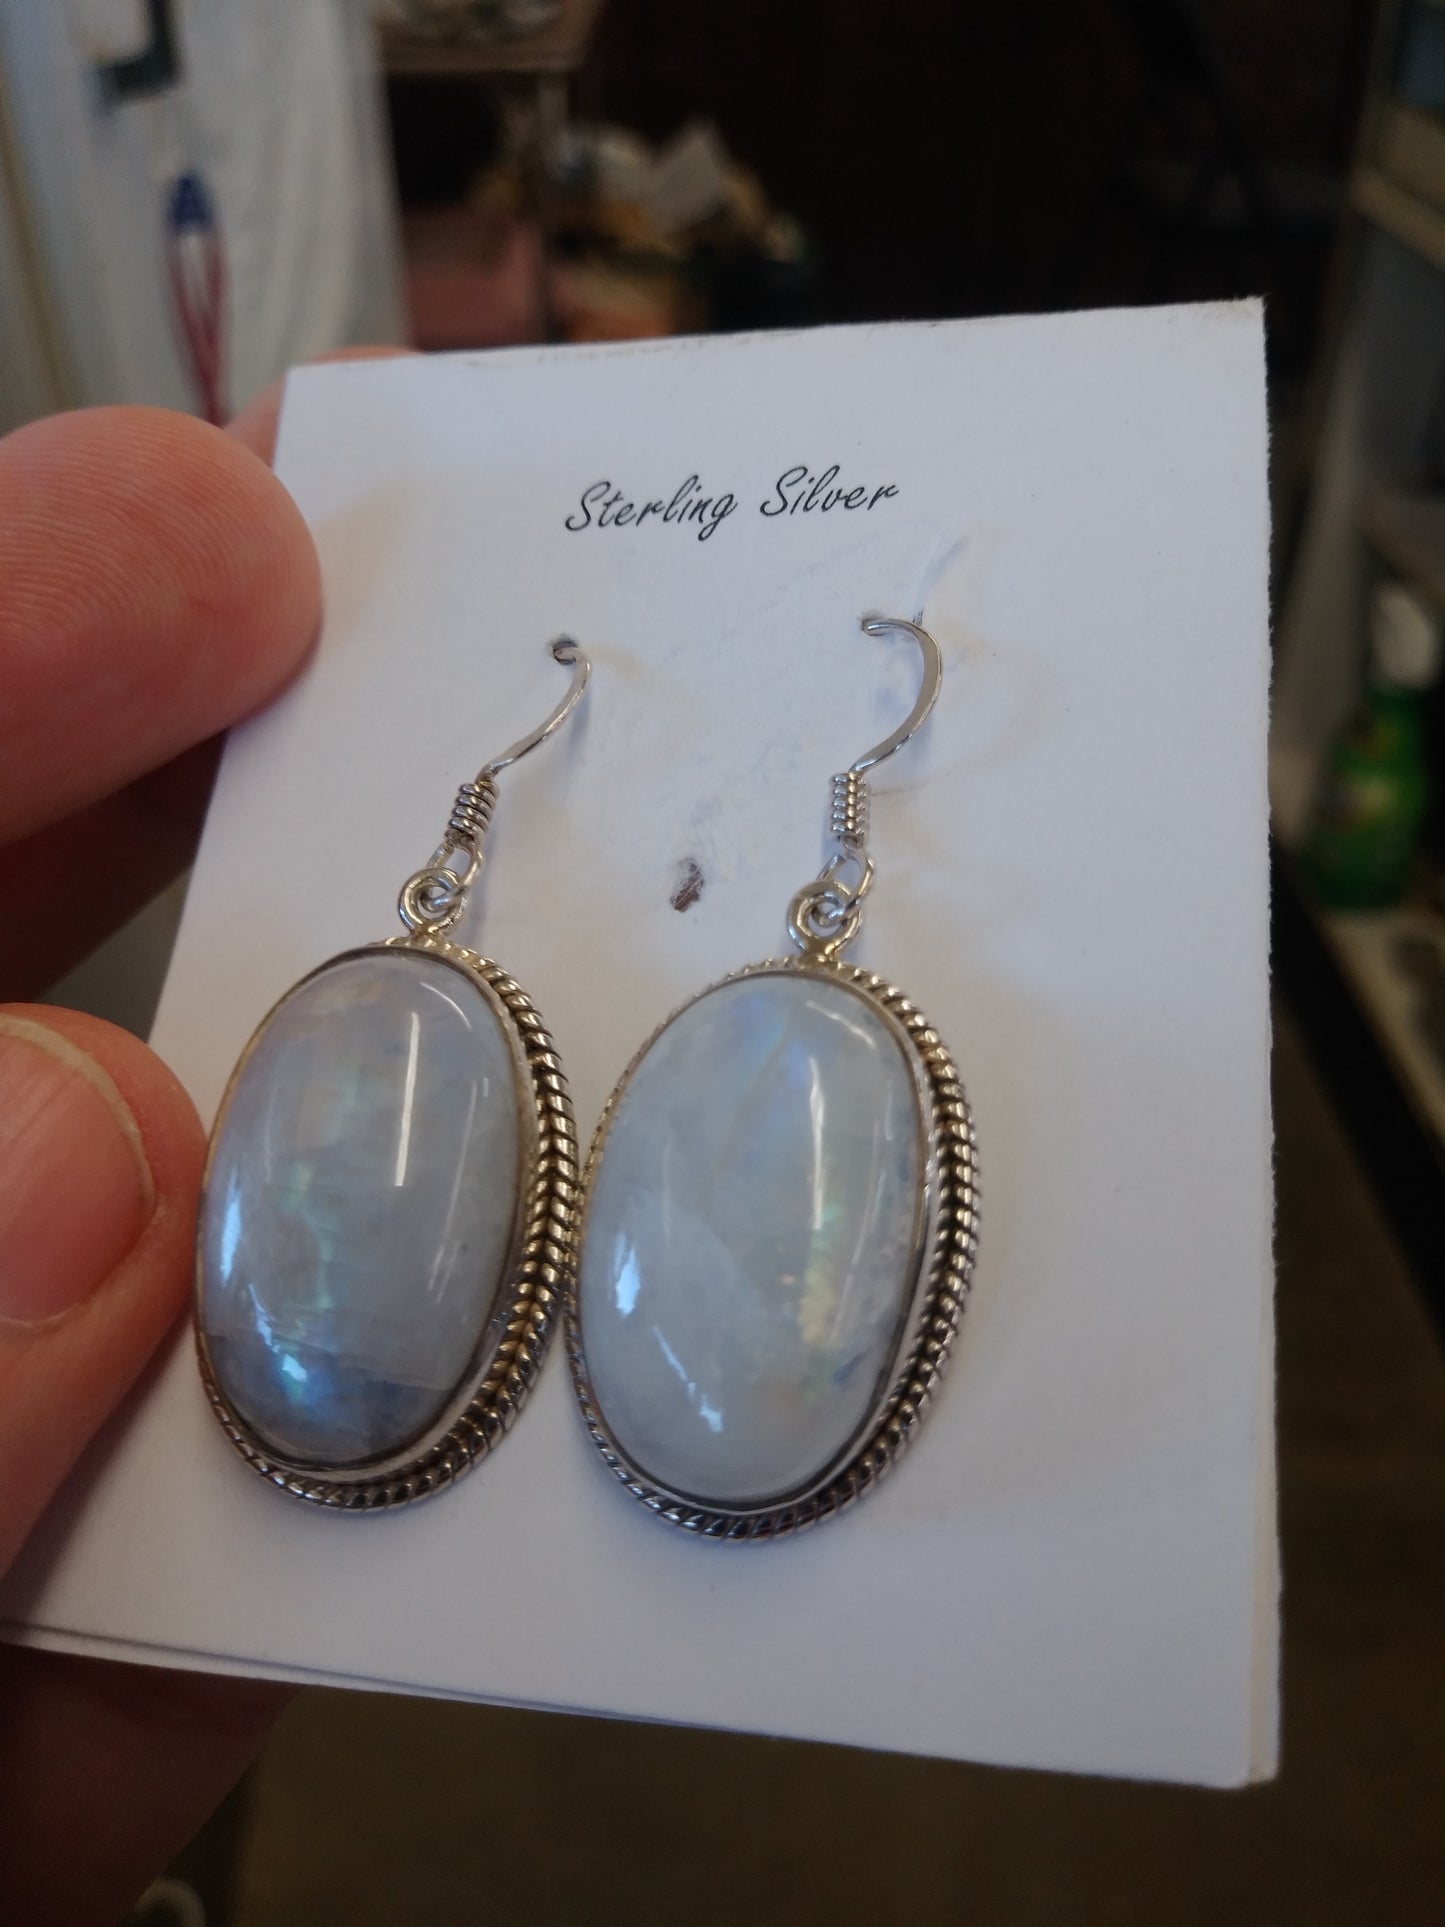 Rainbow Moonstone Earrings in Sterling Silver